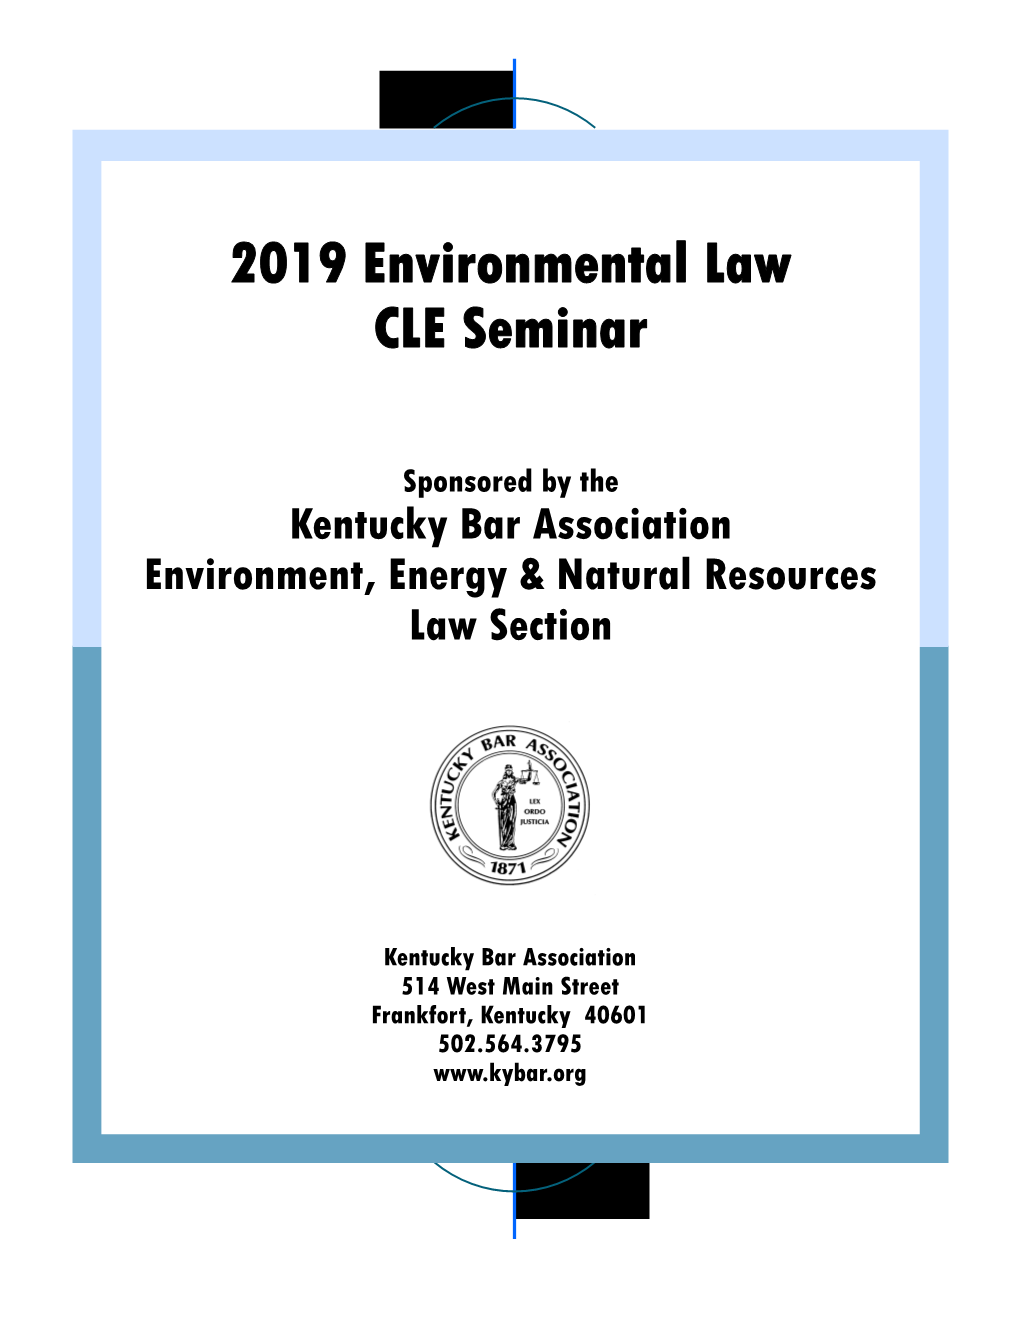 2019 Environmental Law CLE Seminar Handbook